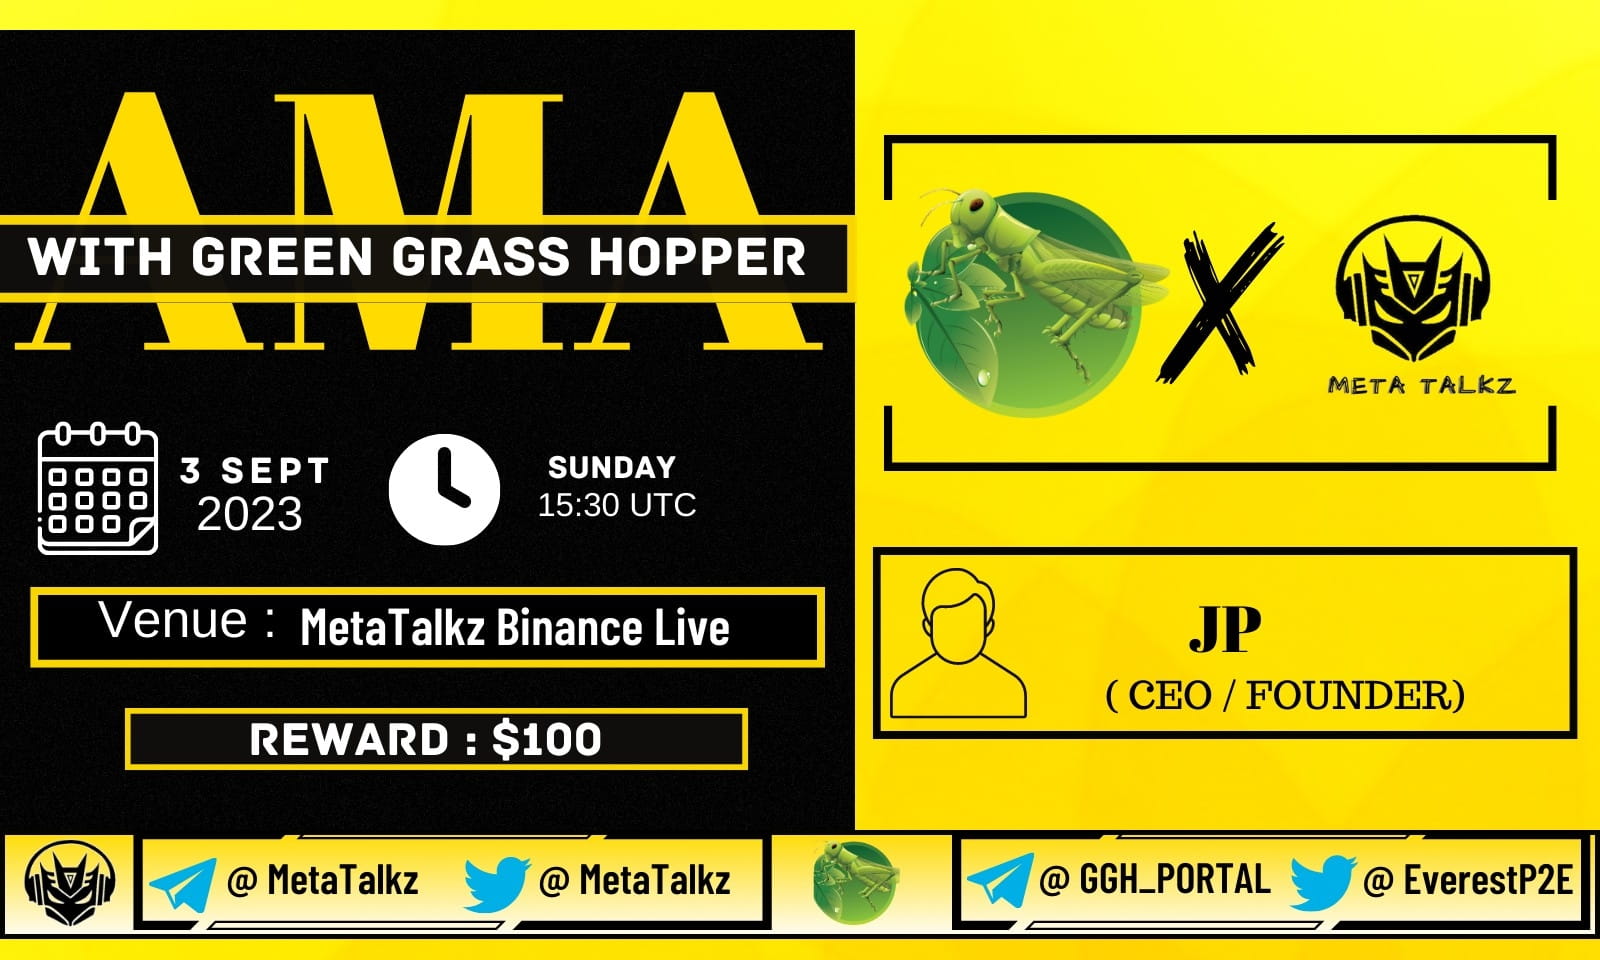 META TALKZ Presents AMA with GREEN GRASS HOPPER